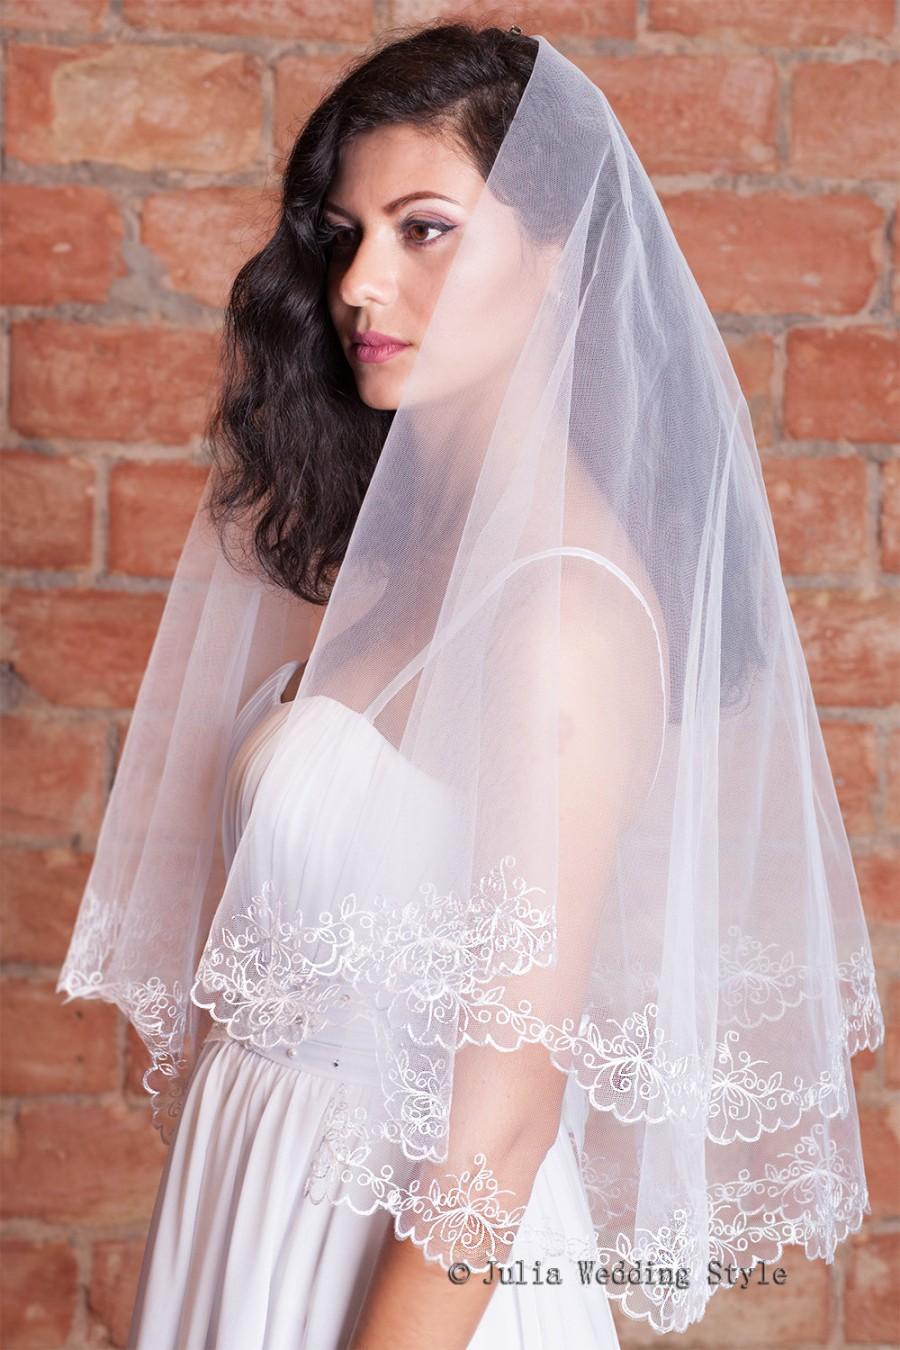 Wedding - 2 tier veil,Waist length tulle veil,embroidered veil,Circle veil,white tulle veil,classic veil,long white veil,custom veil,short veil